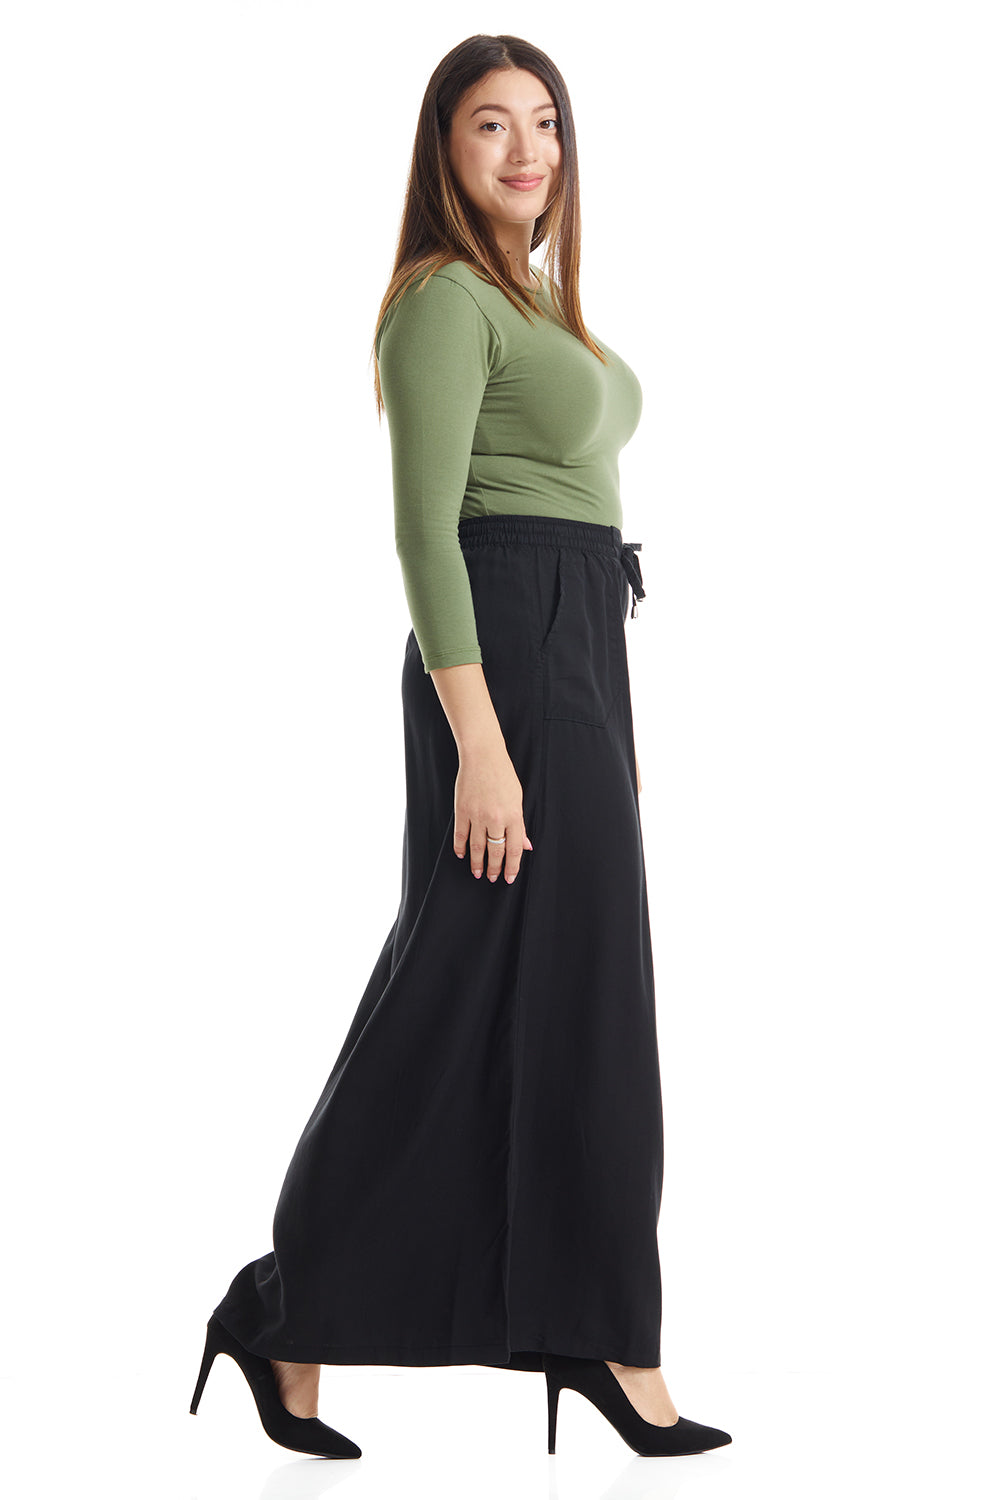 long ankle length flary black tencel skirt with drawstring closure and slash pockets